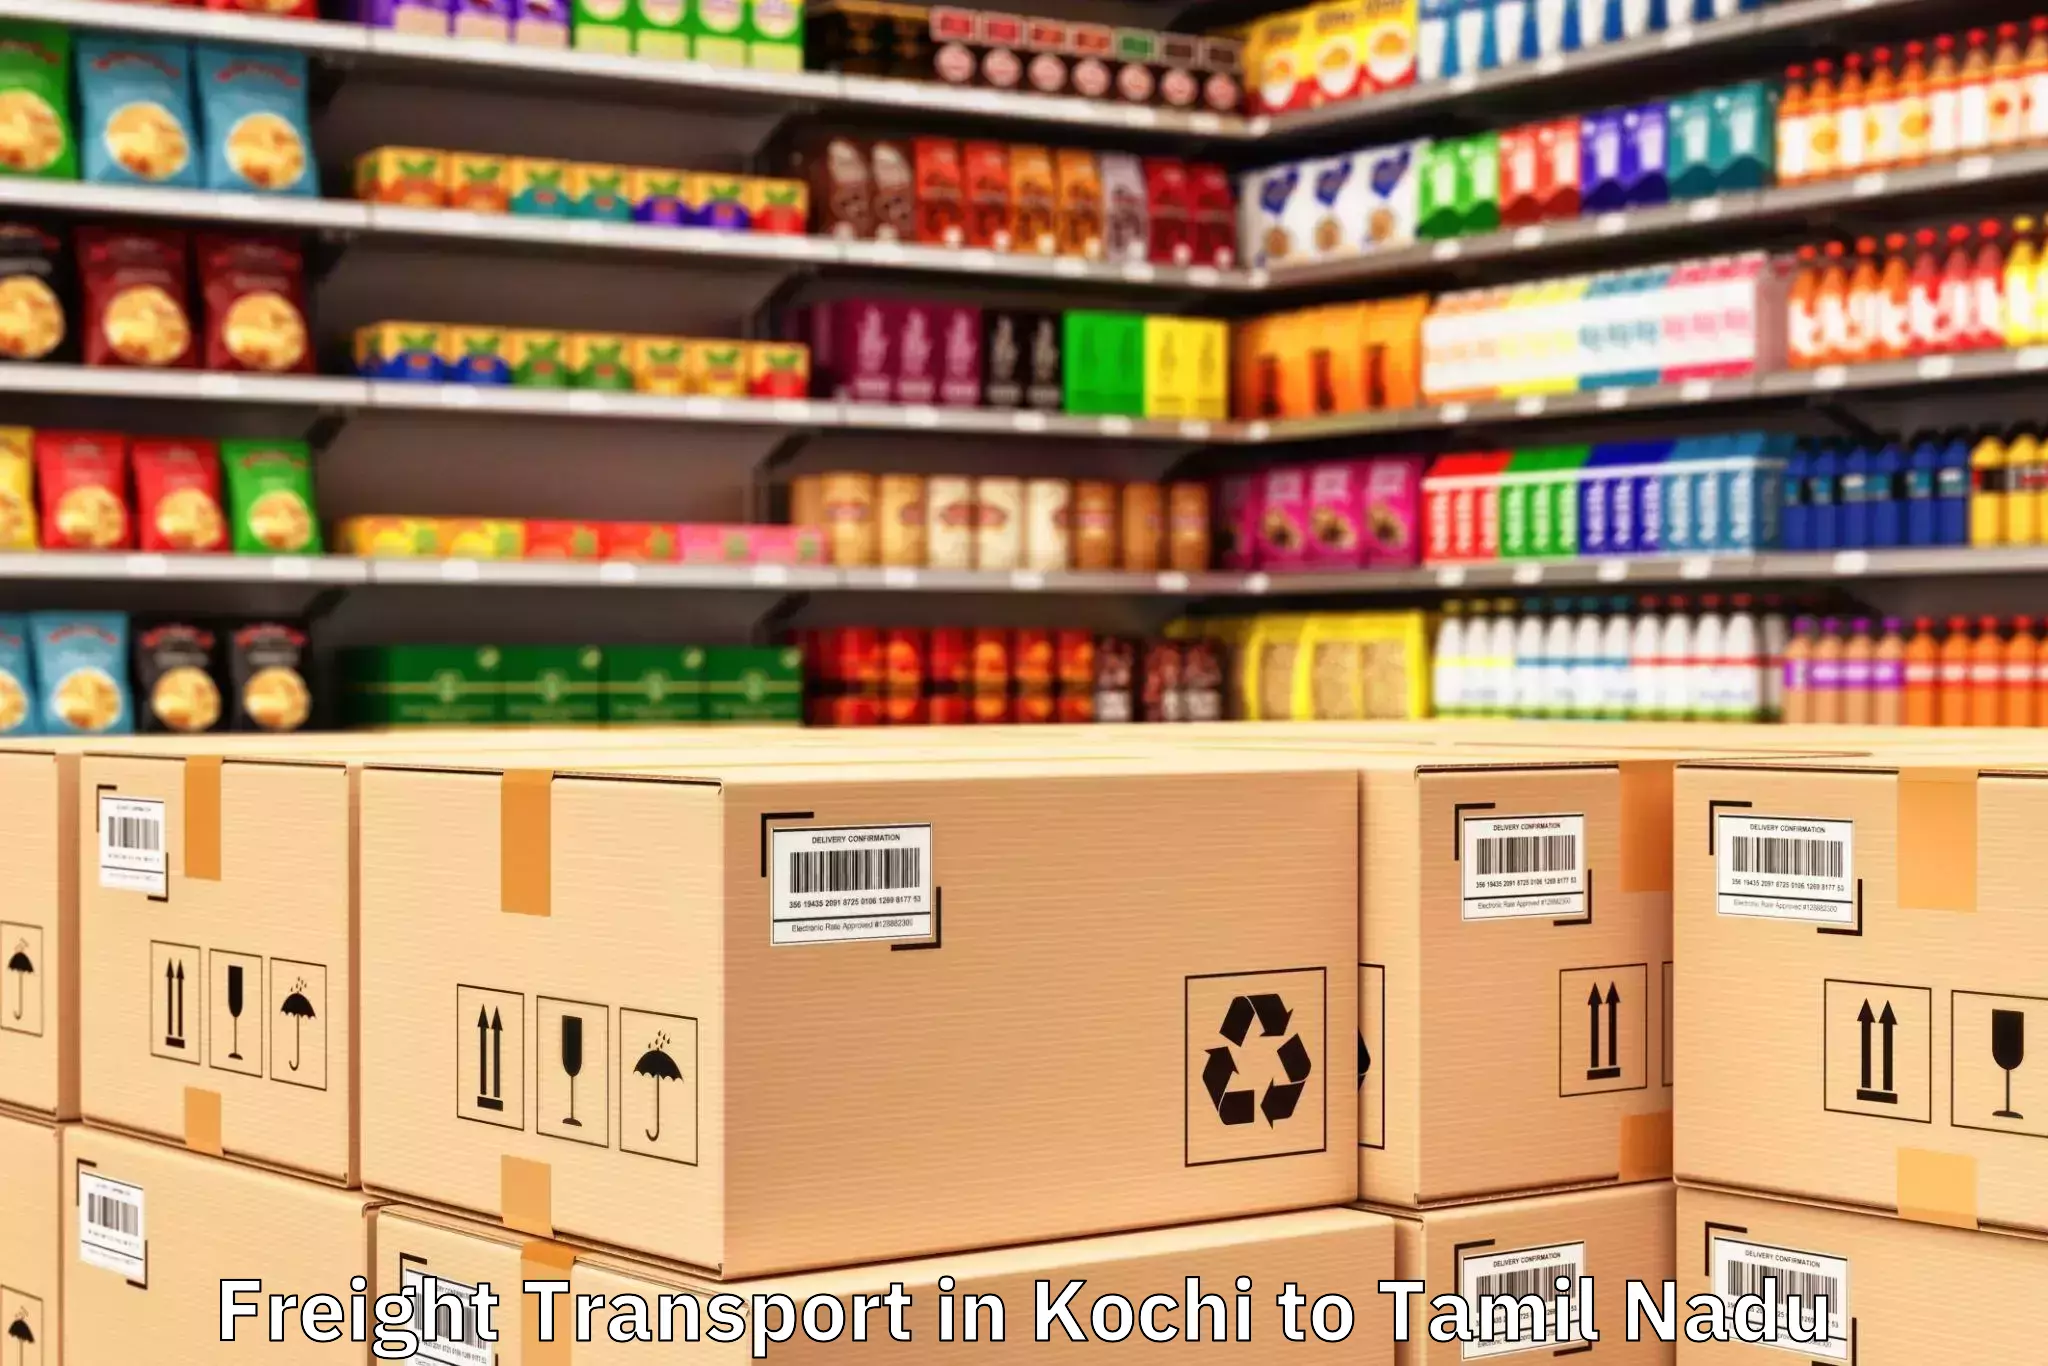 Get Kochi to Peravurani Freight Transport